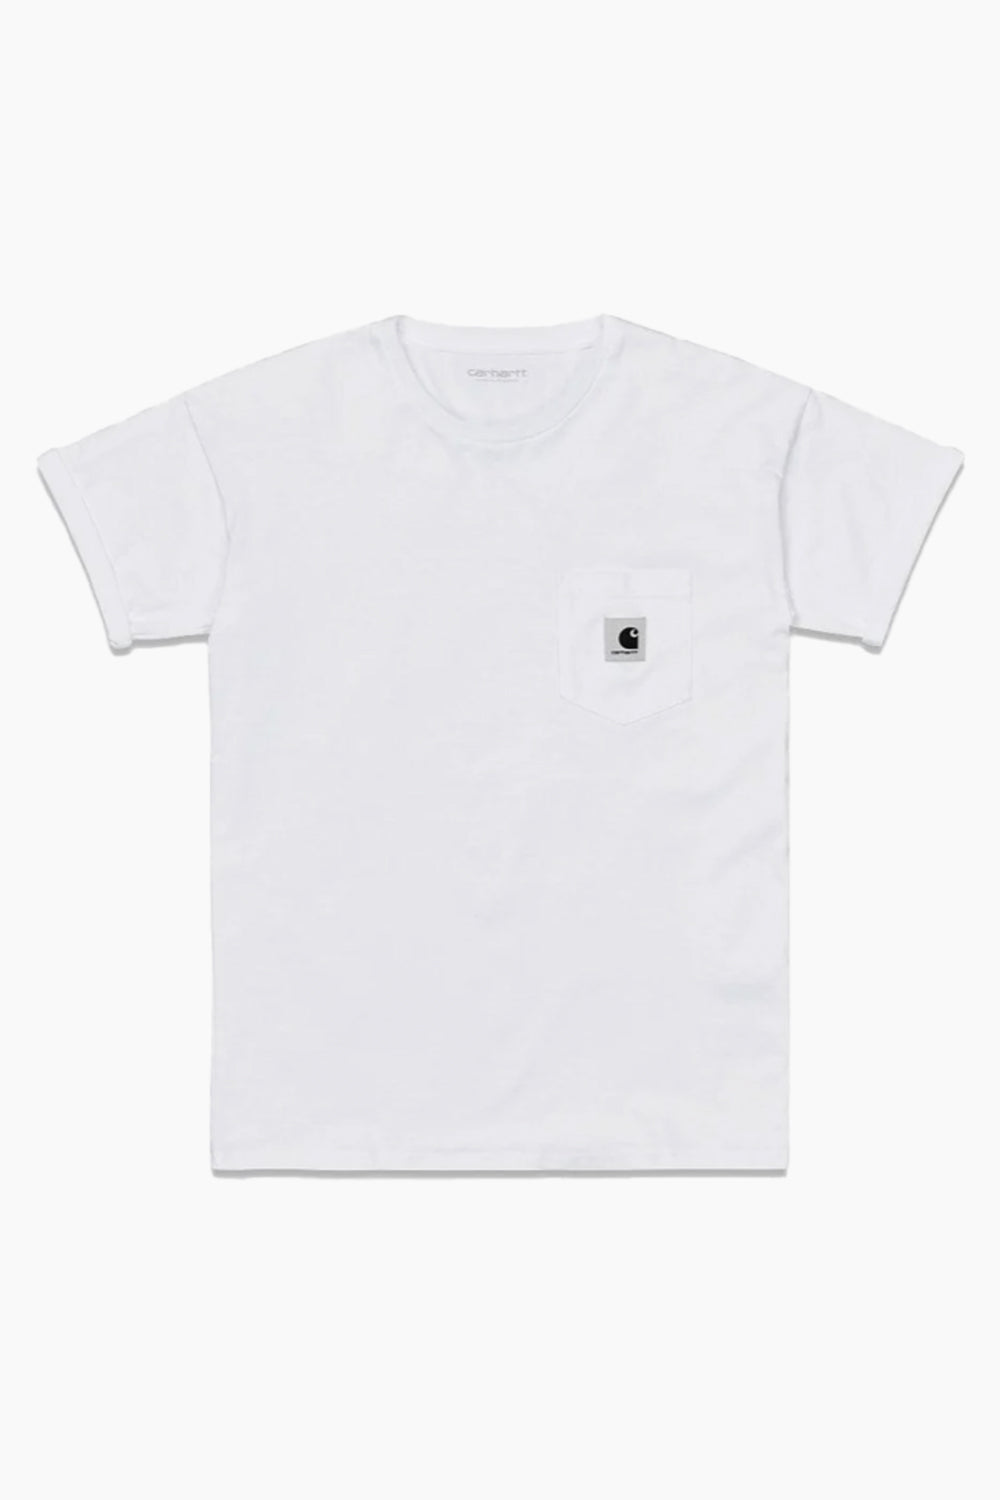 W' S/S Pocket T-shirt - White - Carhartt WIP